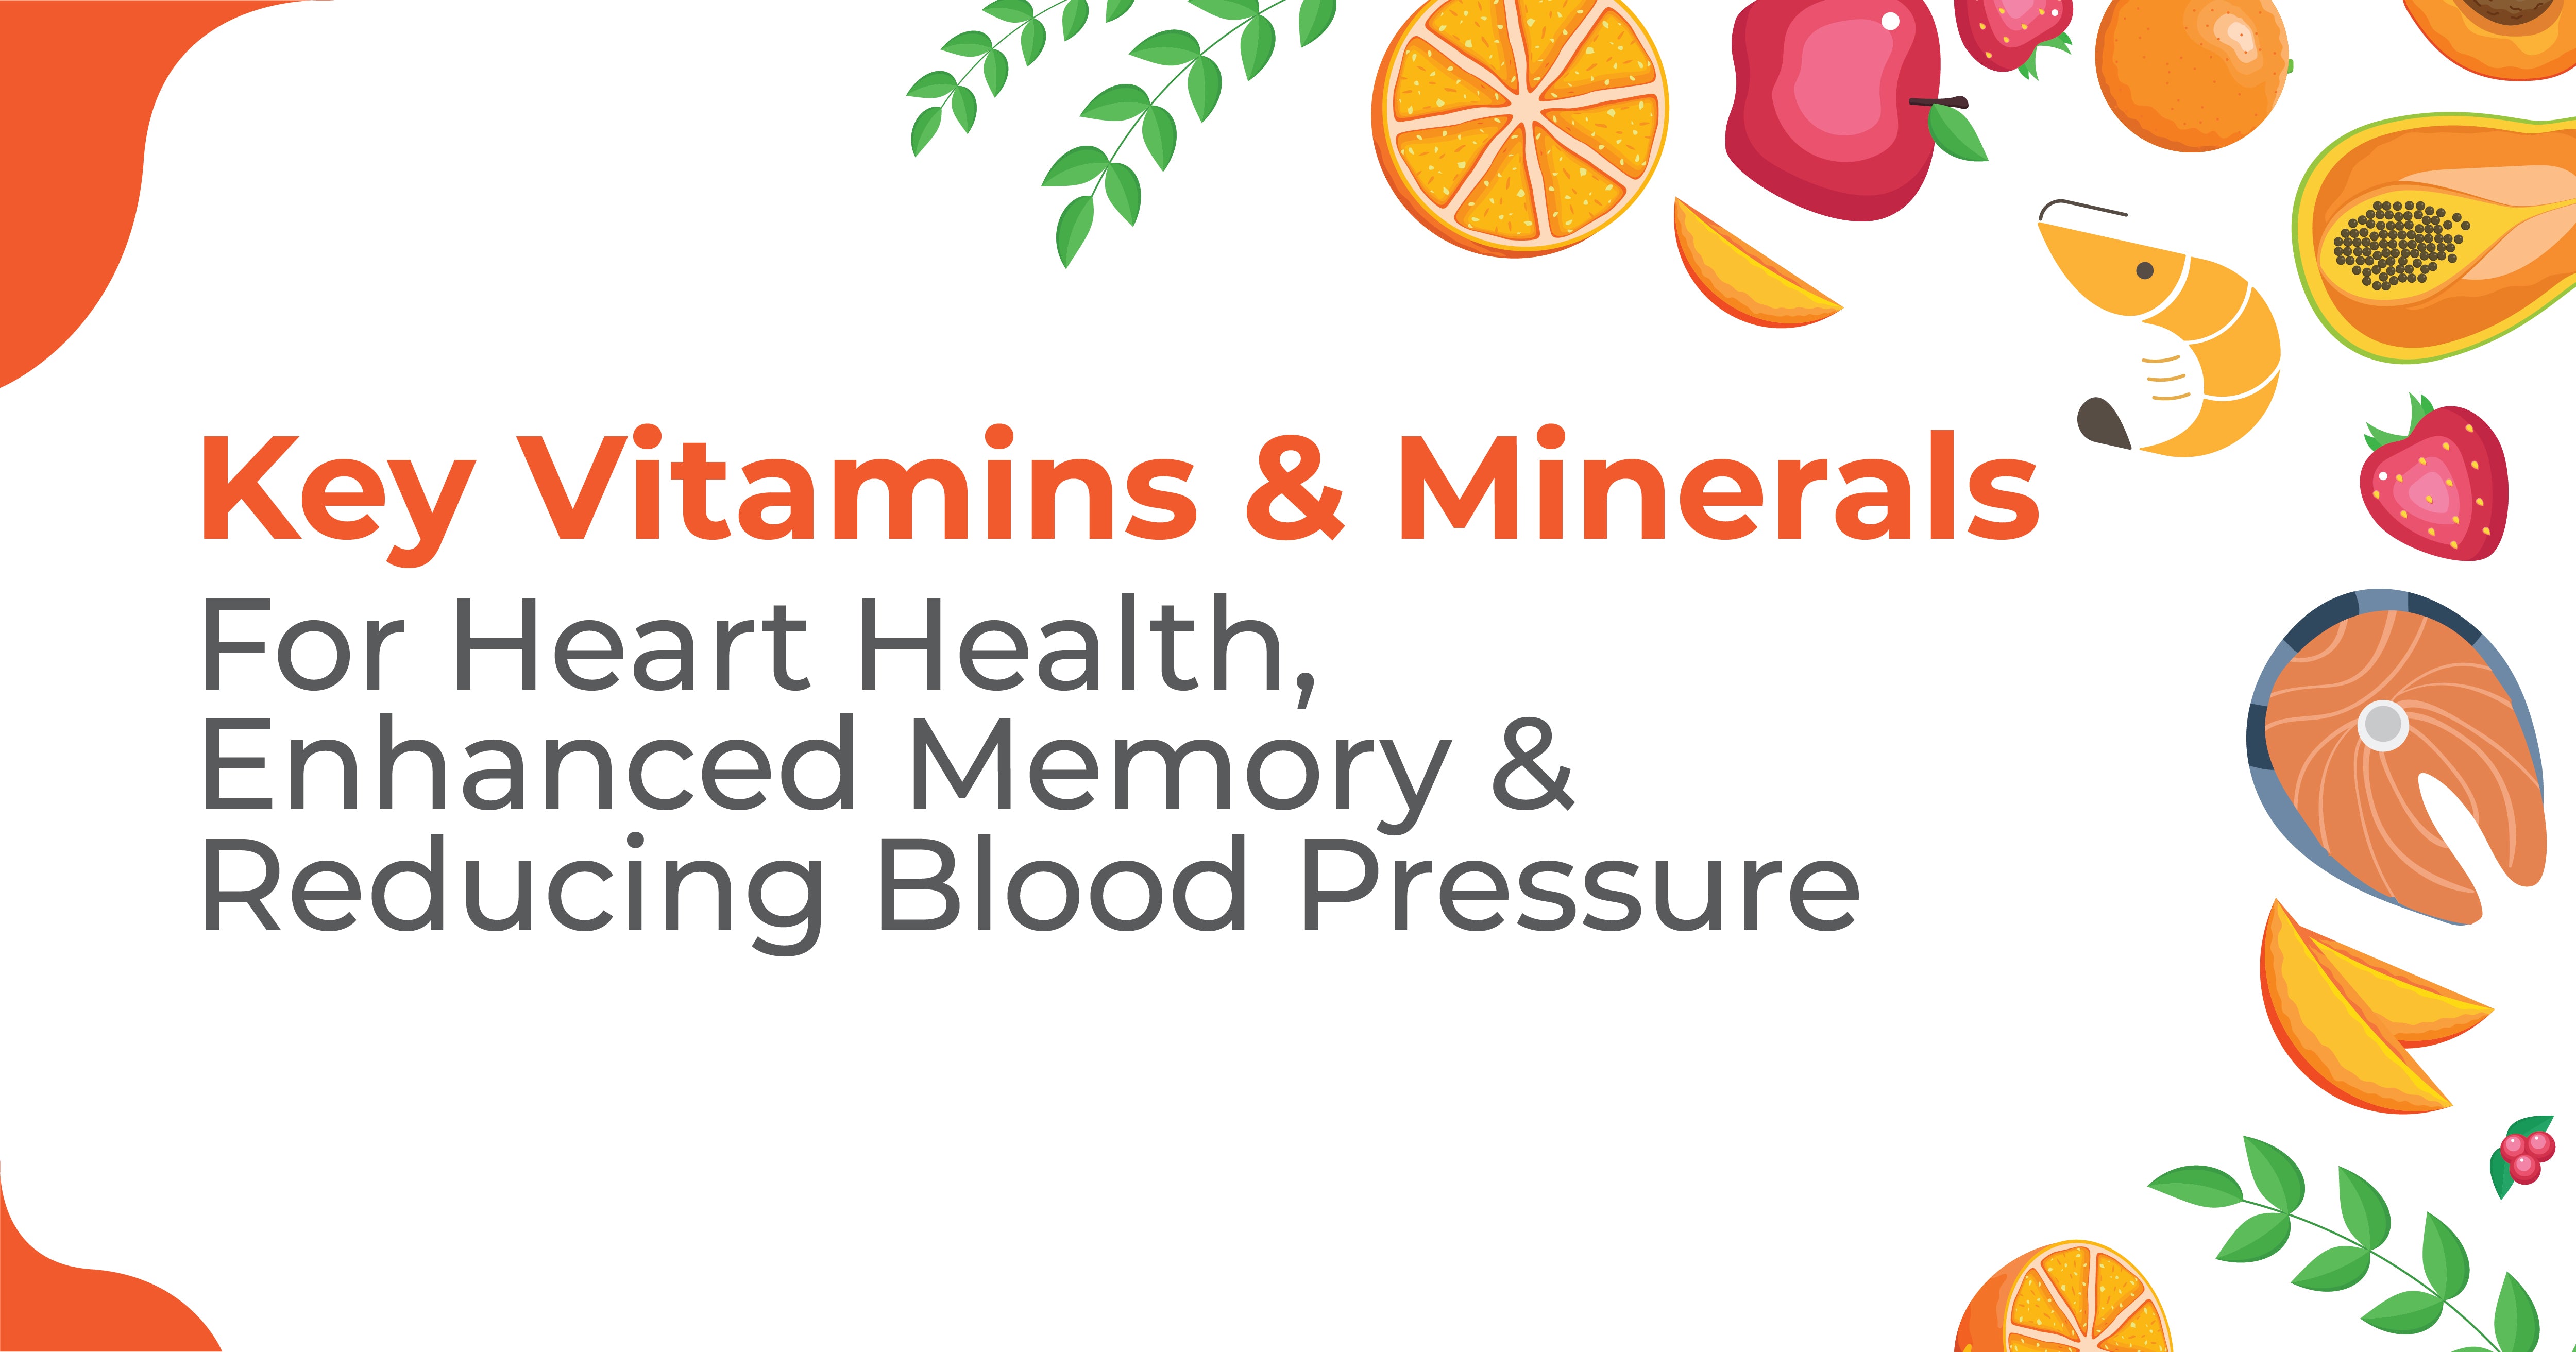 Key Vitamins & Minerals - For Heart Health, Enhanced Memory & Reducing Blood Pressure